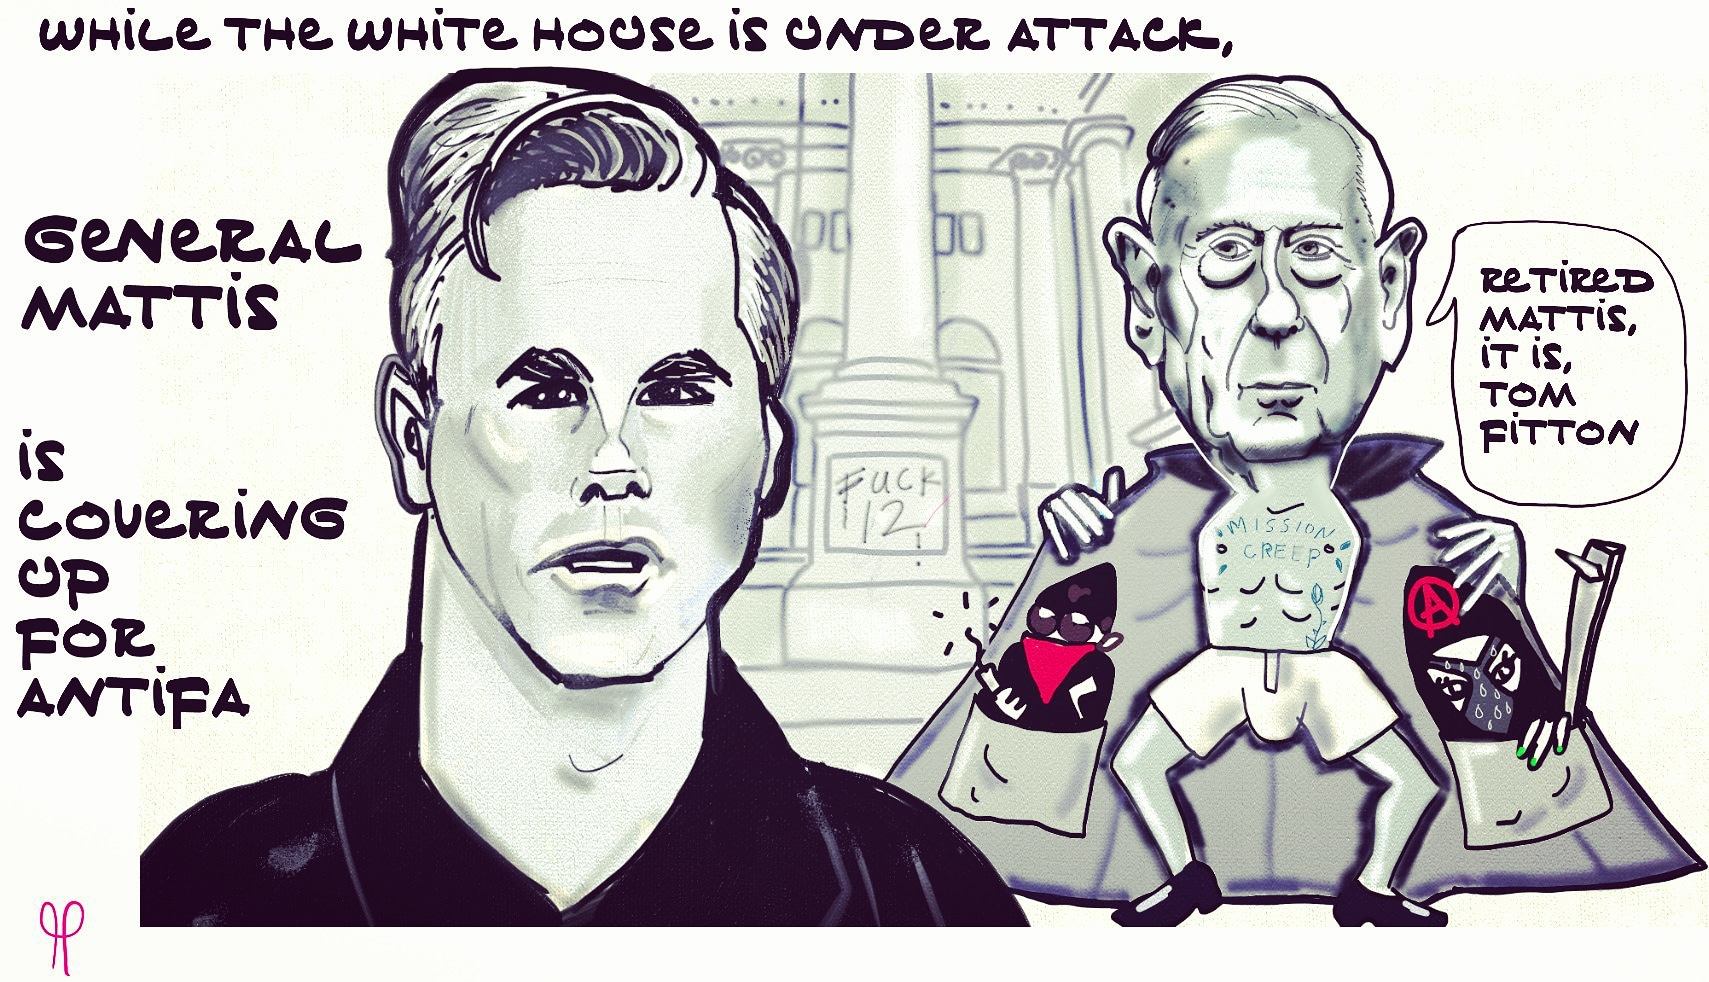 Tom fitton Judicial Watch General James Mattis political cartoon White House antifa 🏛🏛🏛 for President Donald Trump post thumbnail image